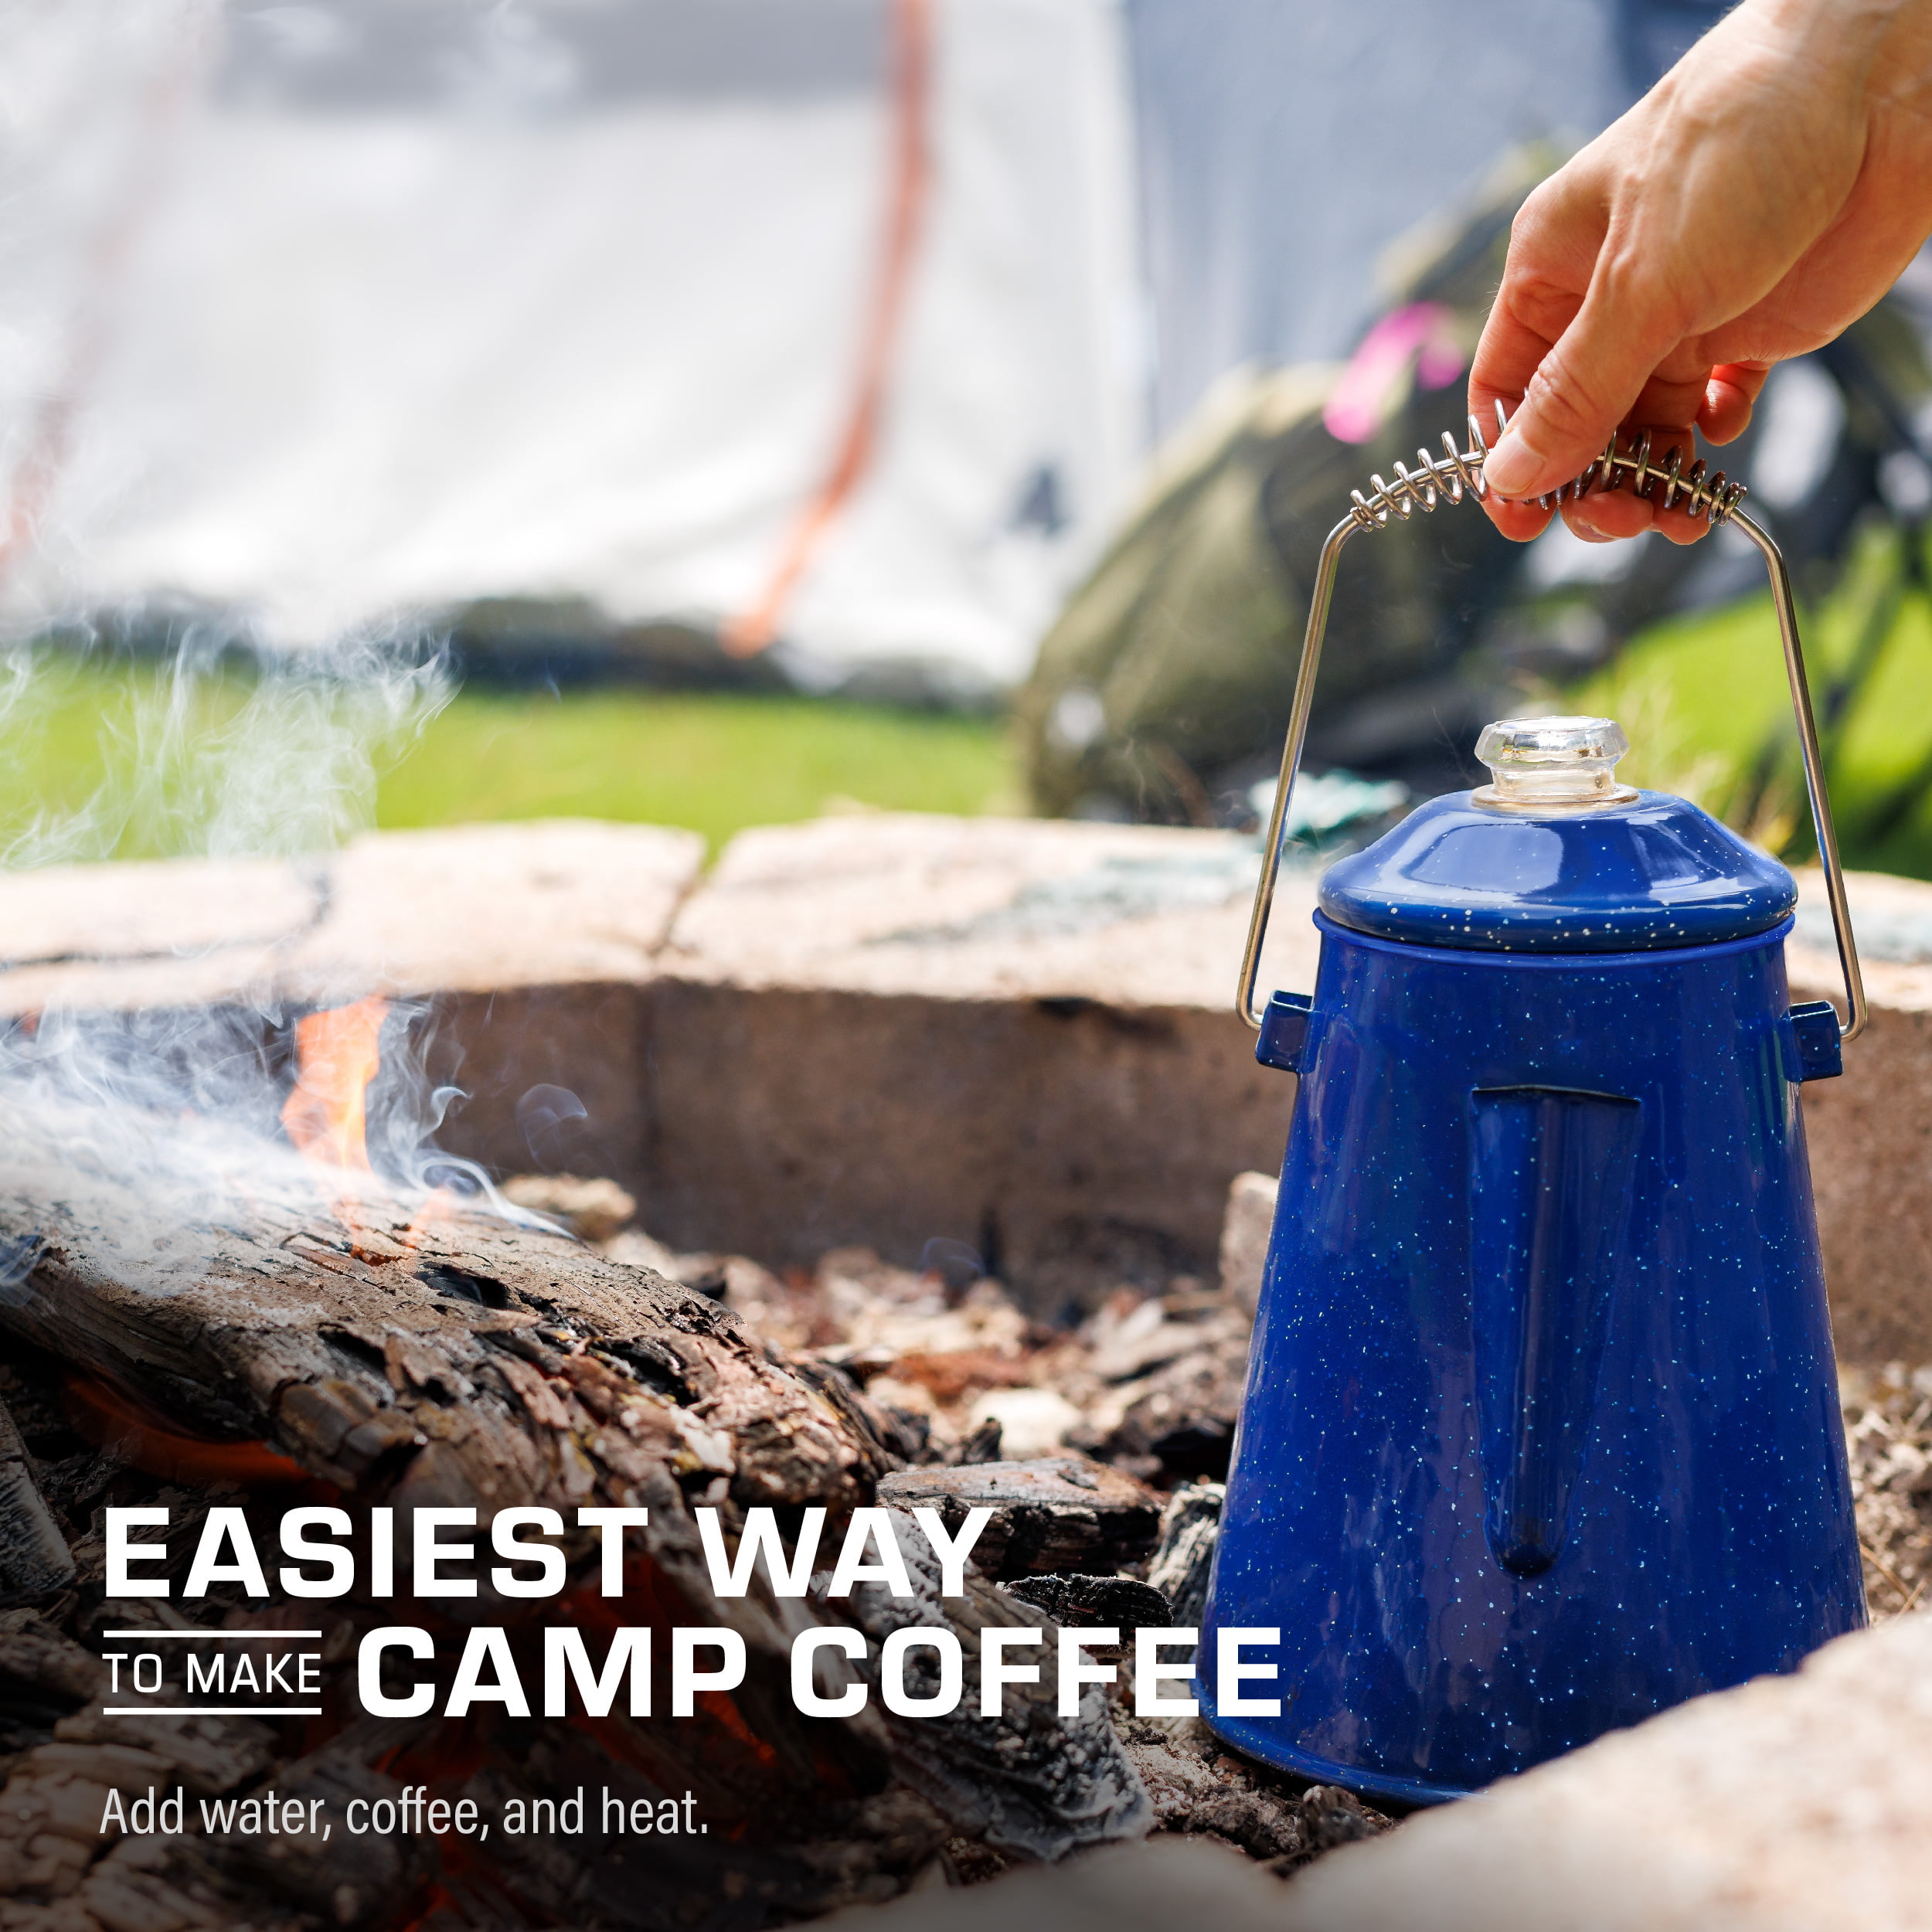 Classic Black Percolator Enamelware Camping Coffee Pot - 12 Cup